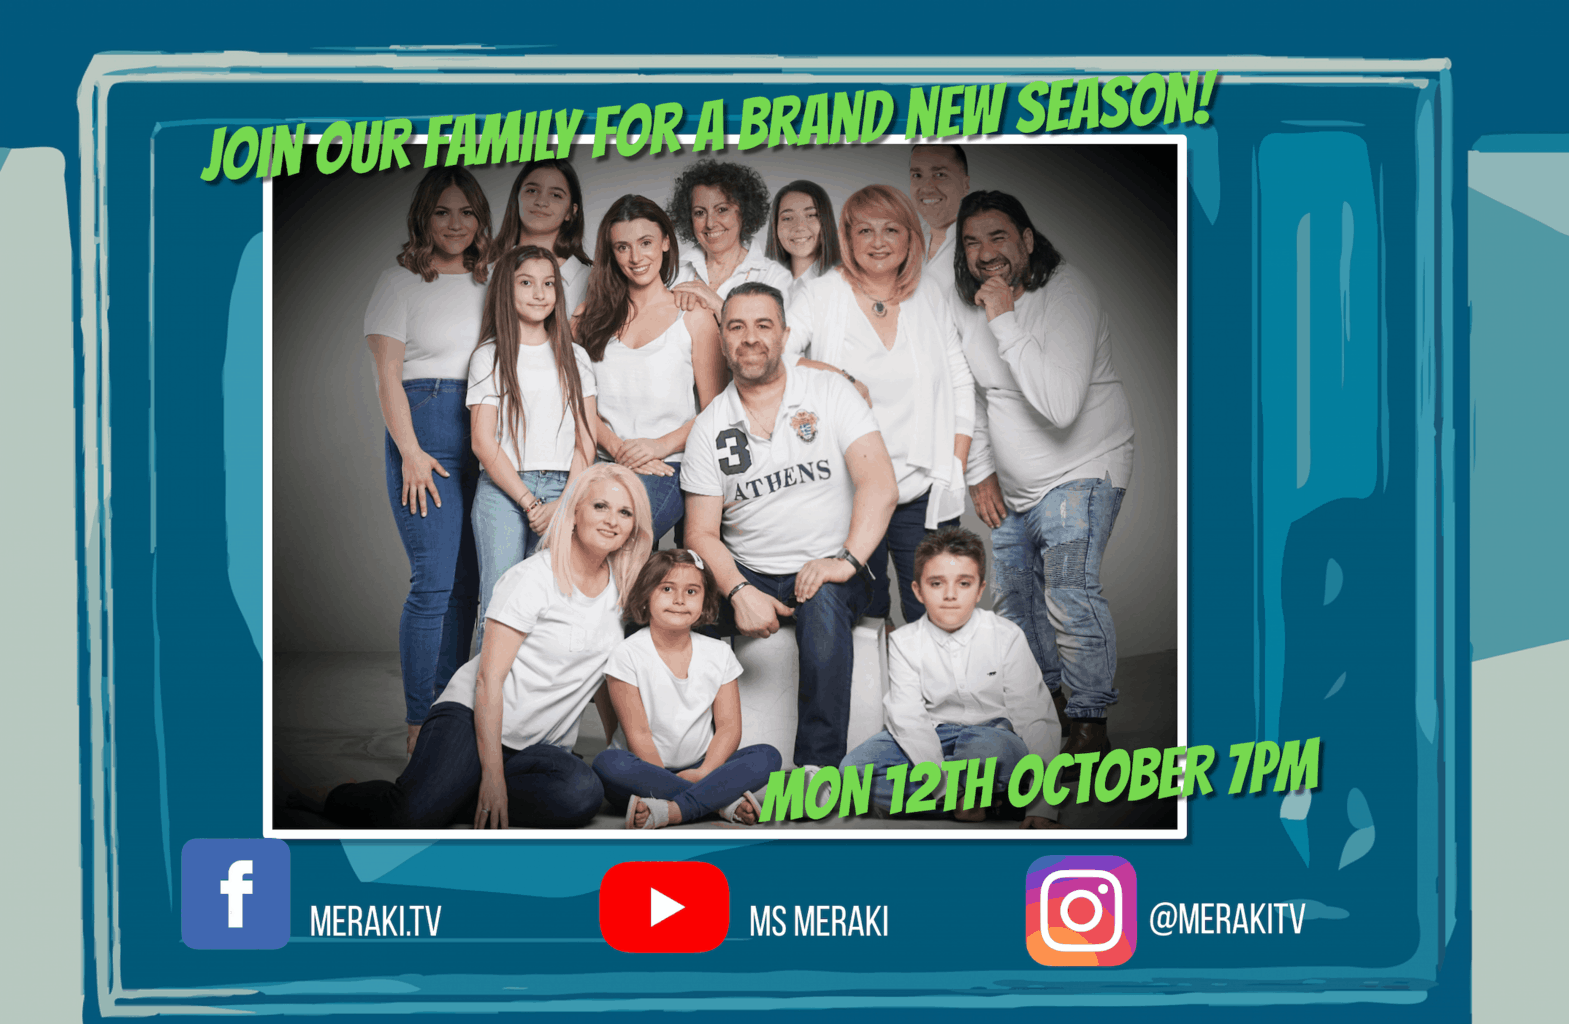 New season of Award-winning Meraki TV premieres October 12